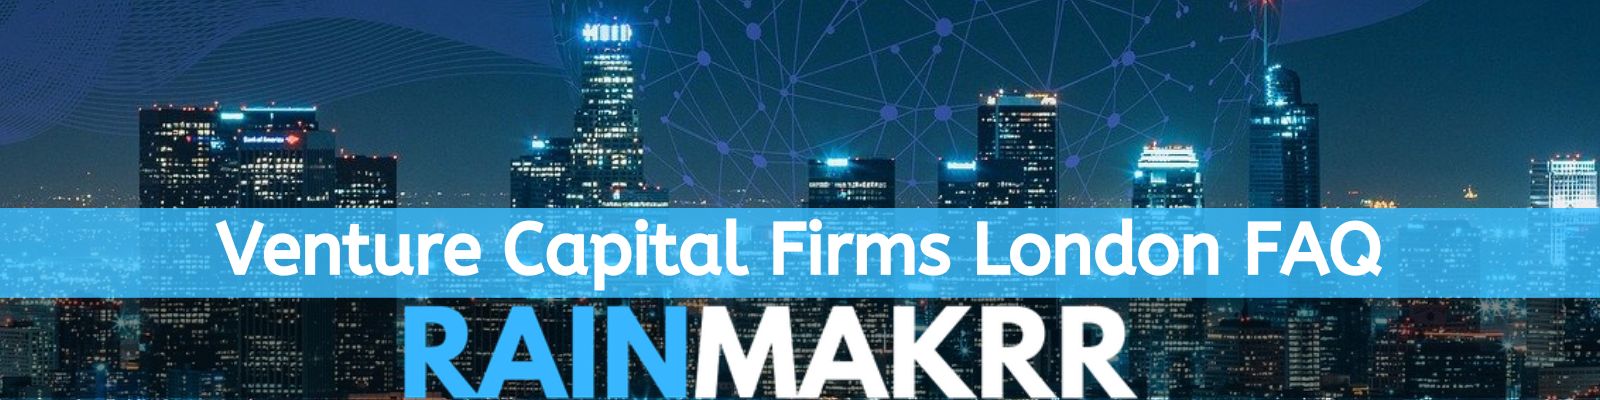 FAQ DT Top Venture Capital Firms London